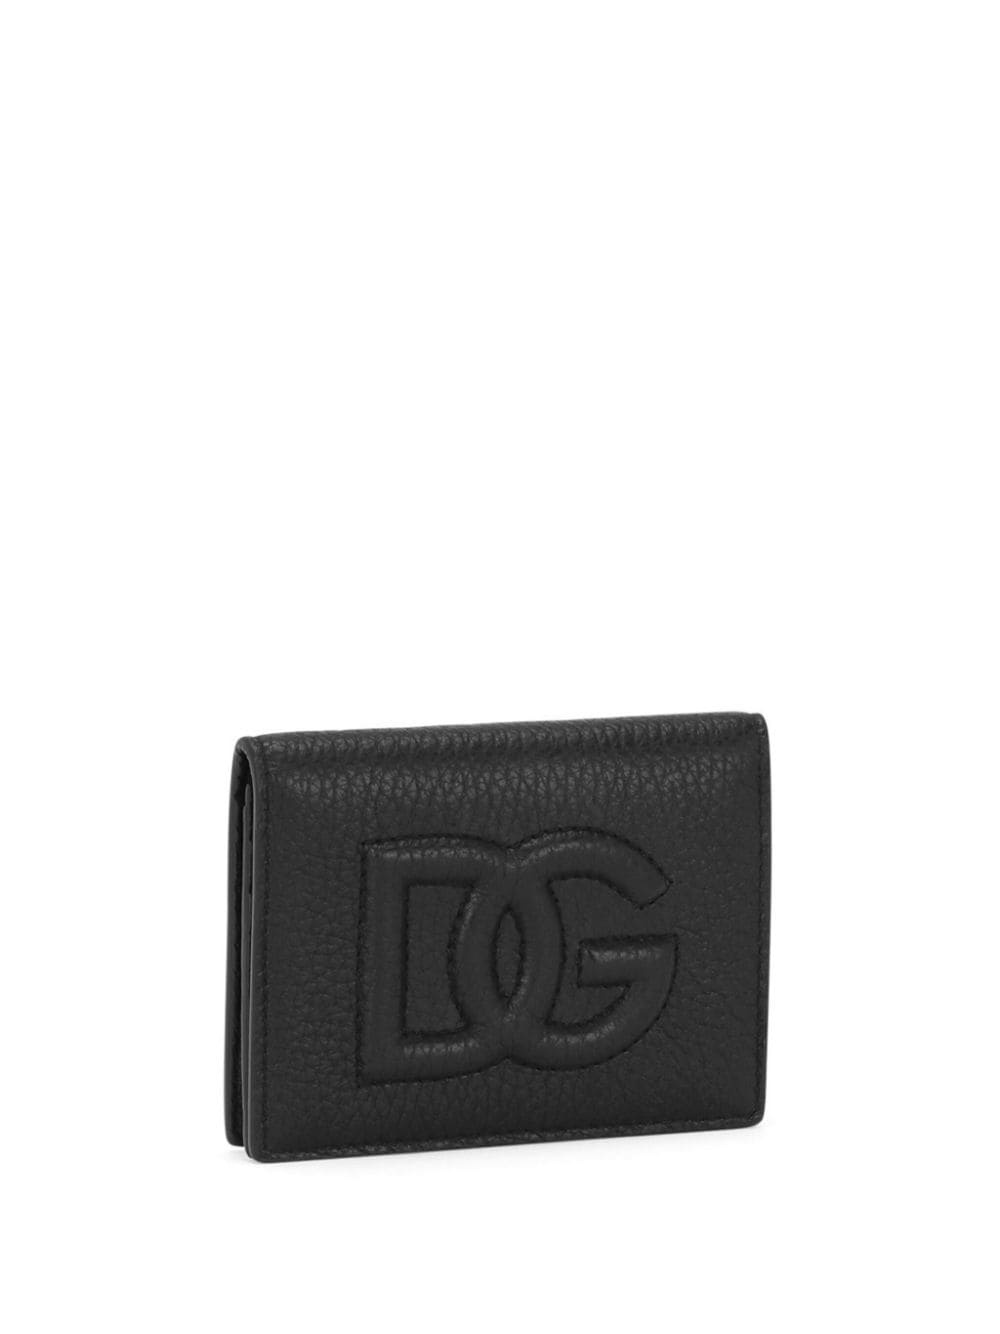 DG logo leather wallet - 3